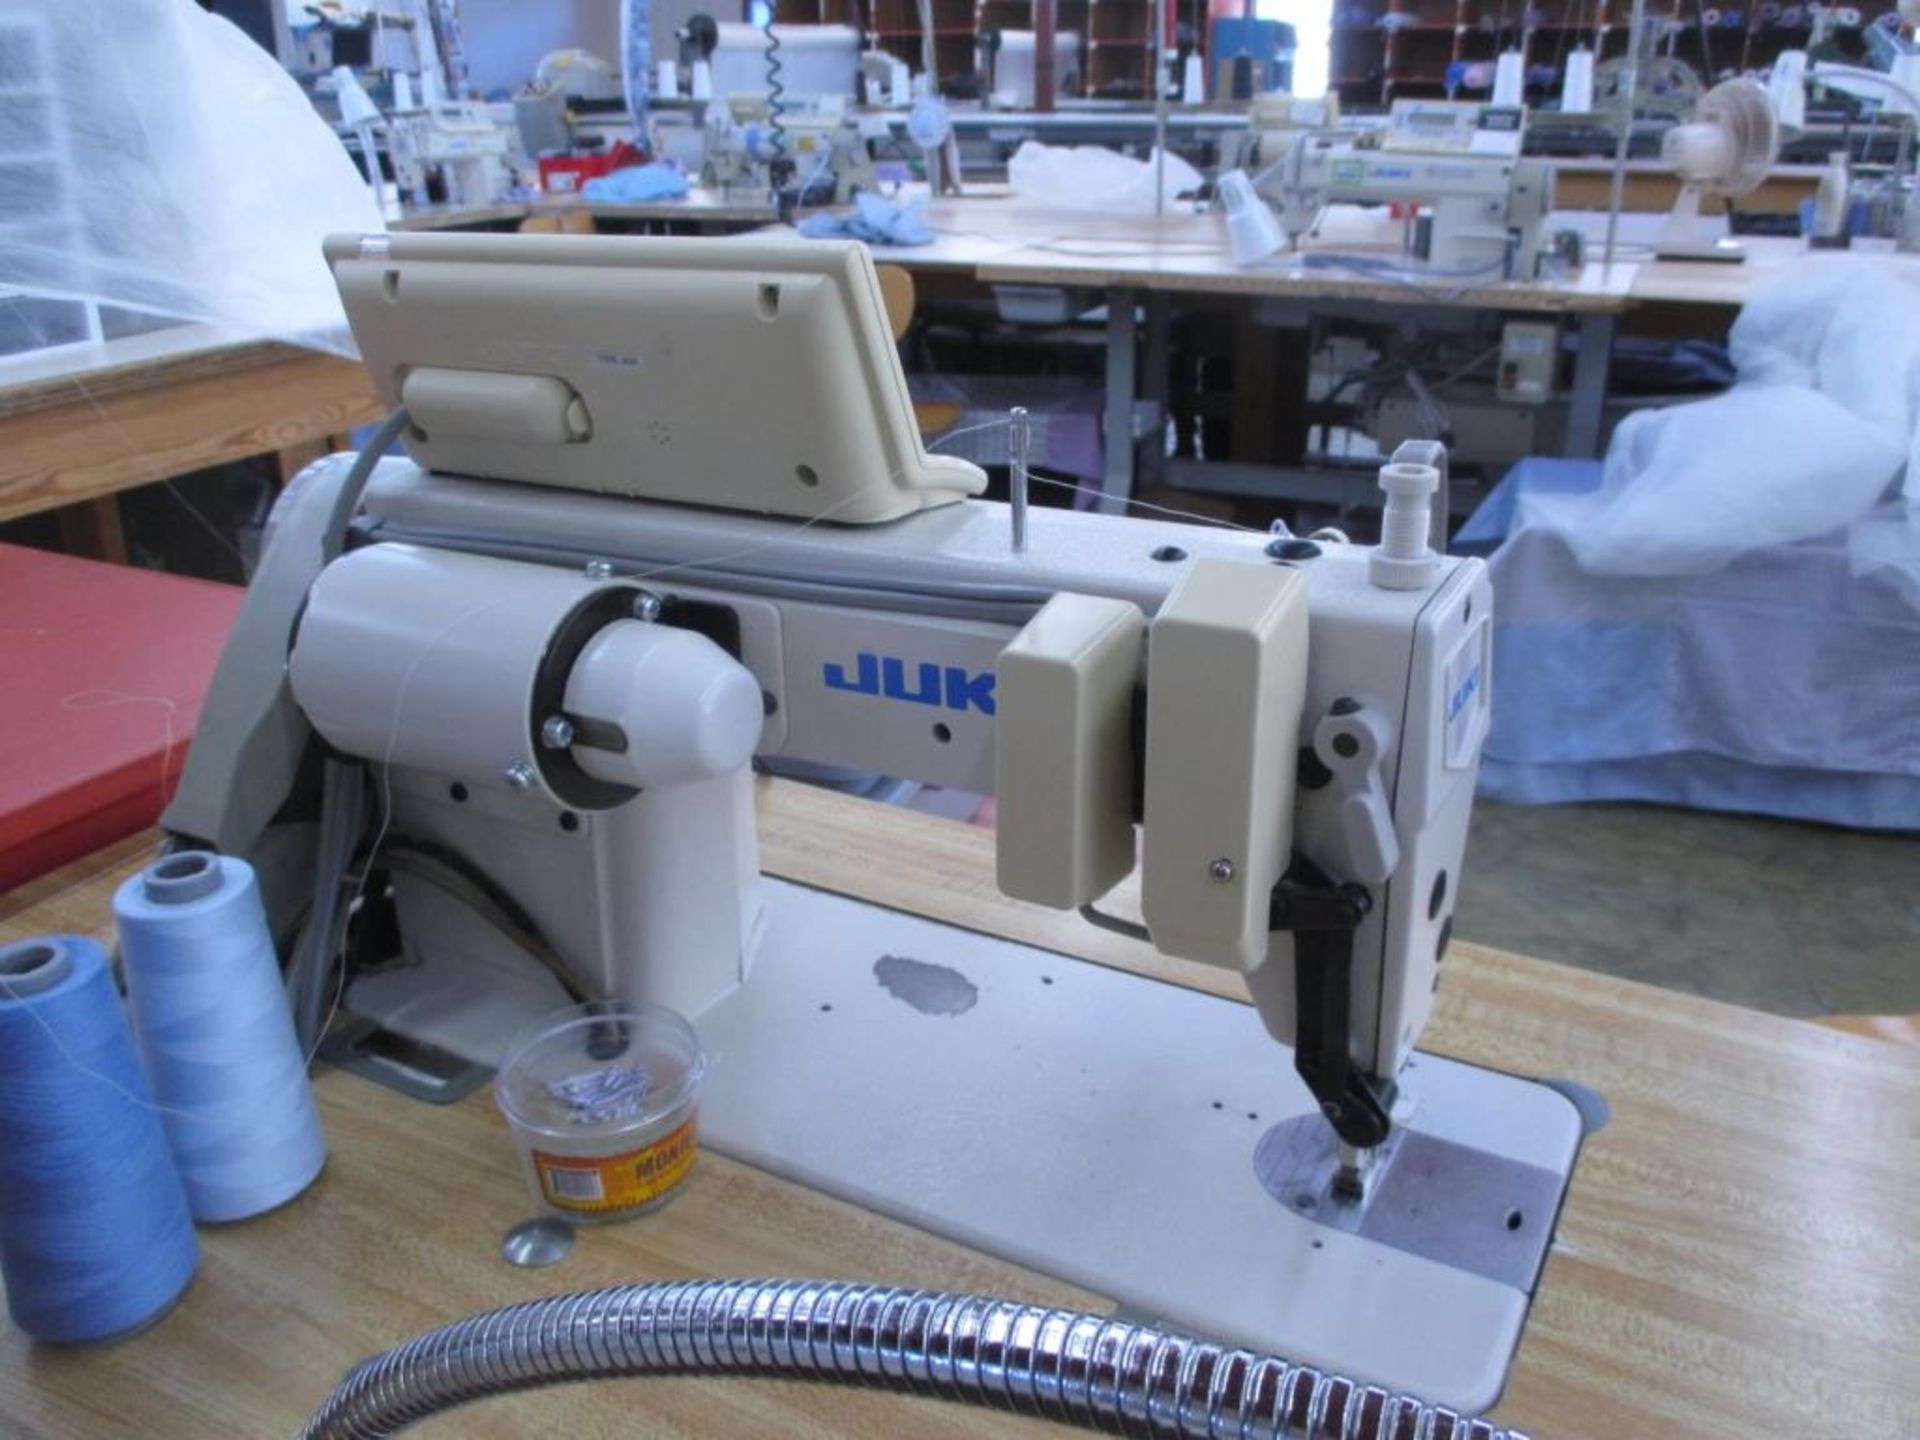 Lockstitch Reverse Industrial Sewing Machine. Juki DDL-5550N-7 1-Needle Lockstitch Reverse - Image 3 of 6